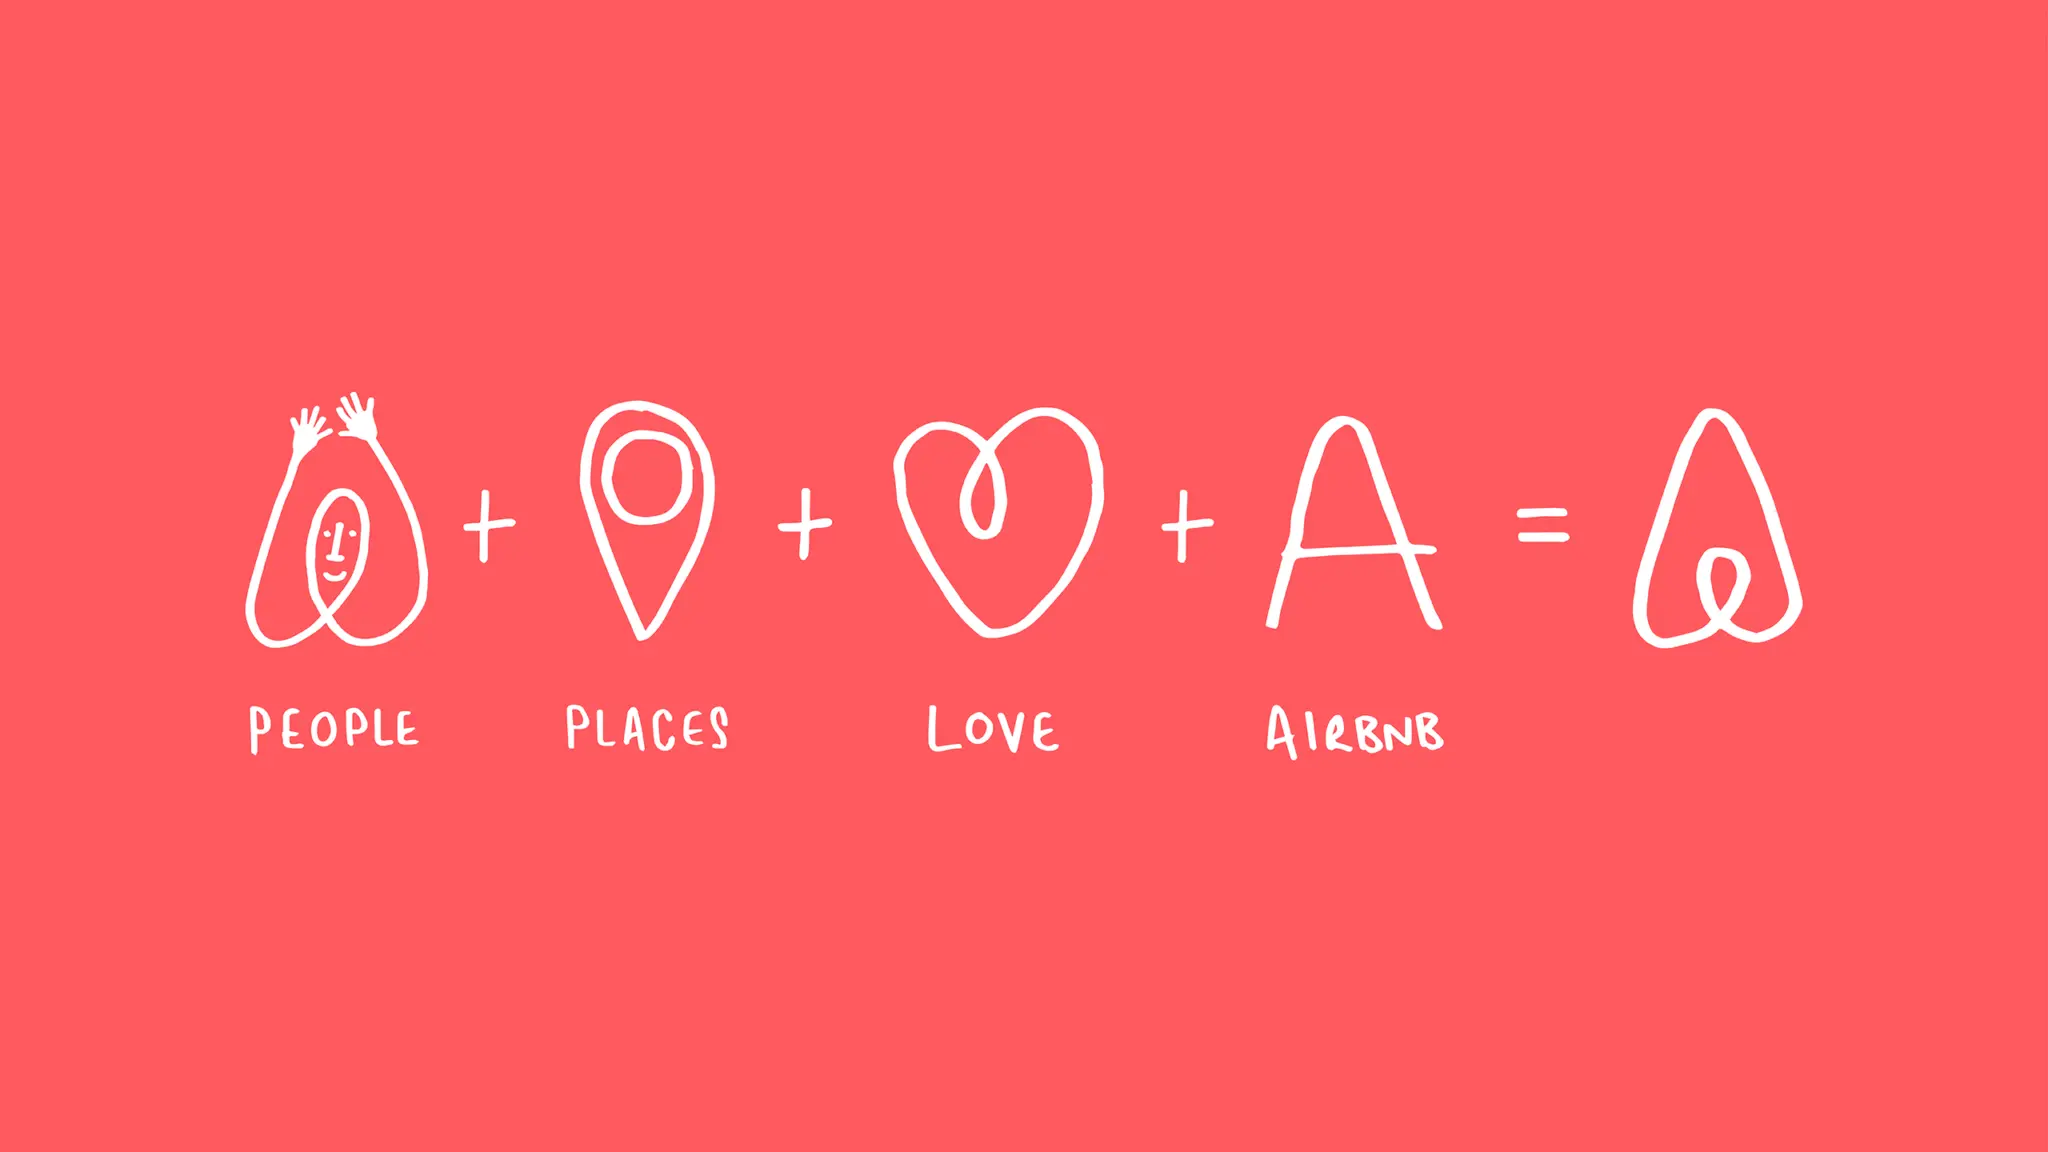 Airbnb Logo Animation 001